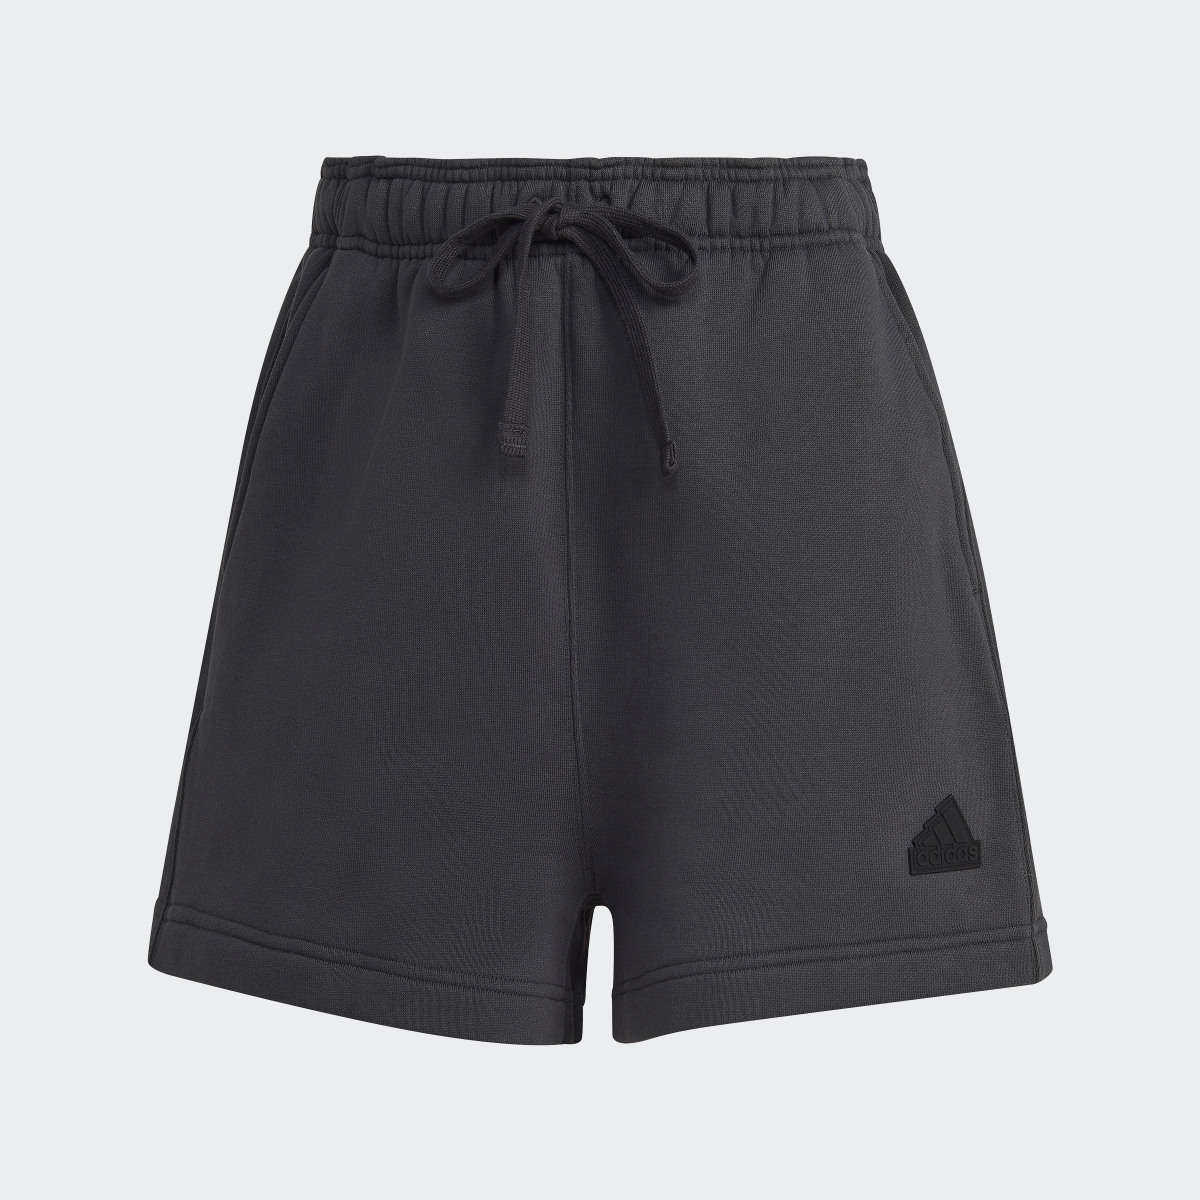 Adidas Sweat Shorts. 6